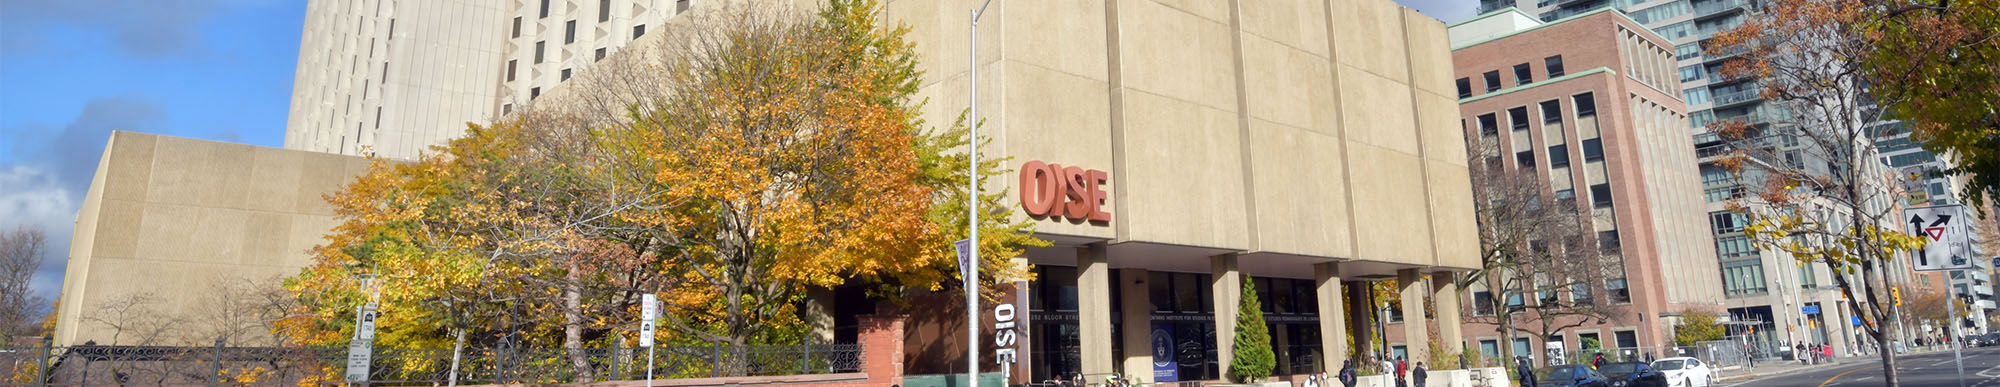 OISE Building